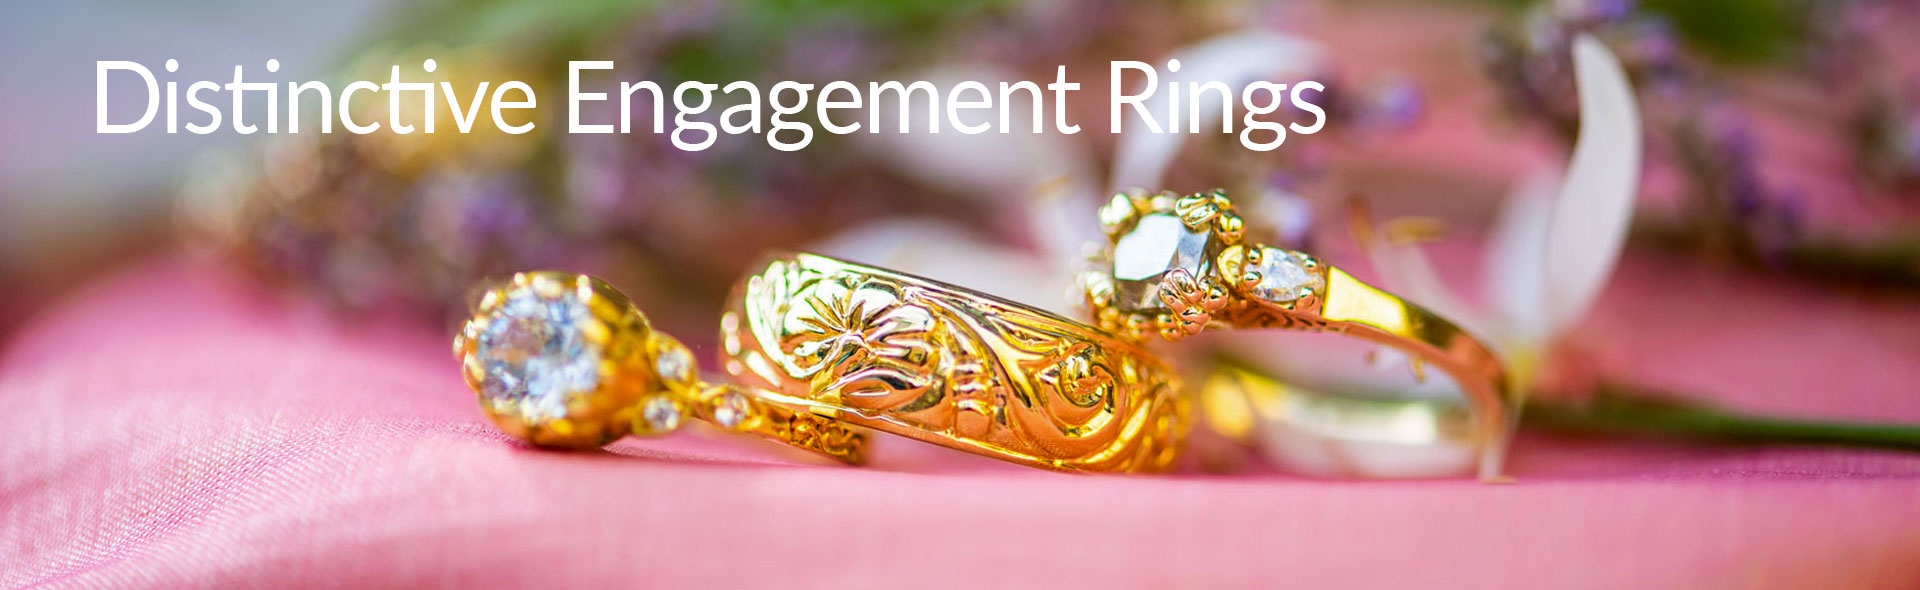 Distinctive Engagement Rings